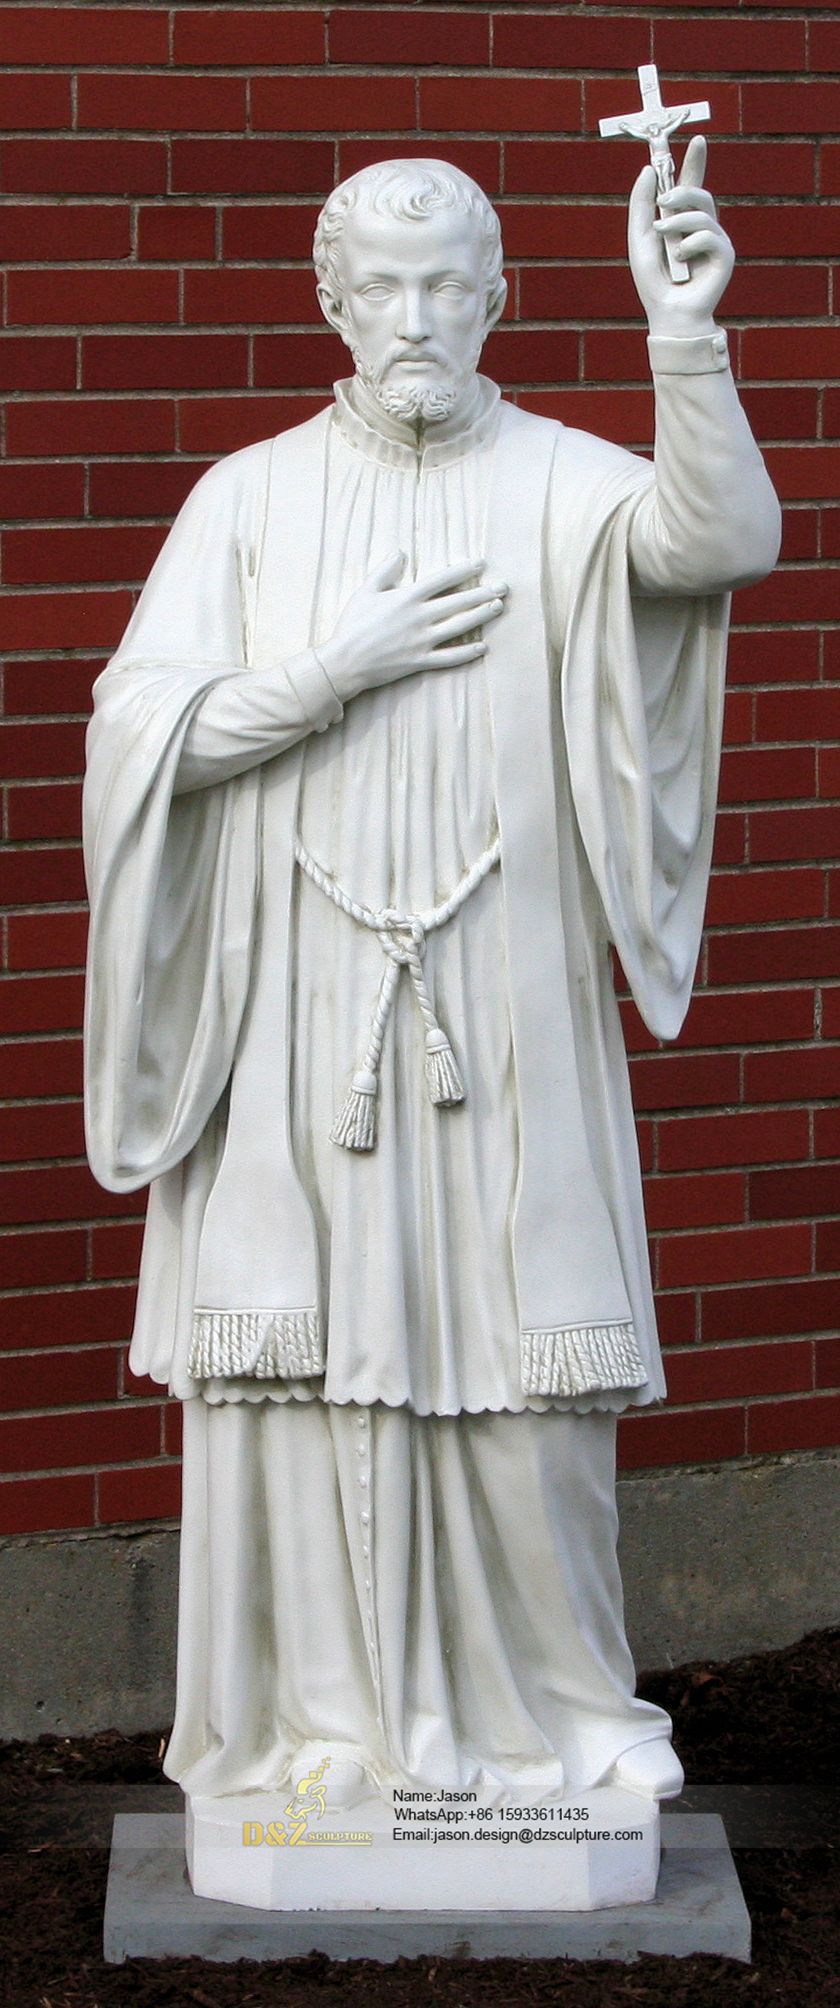 Saint francis xavier statue